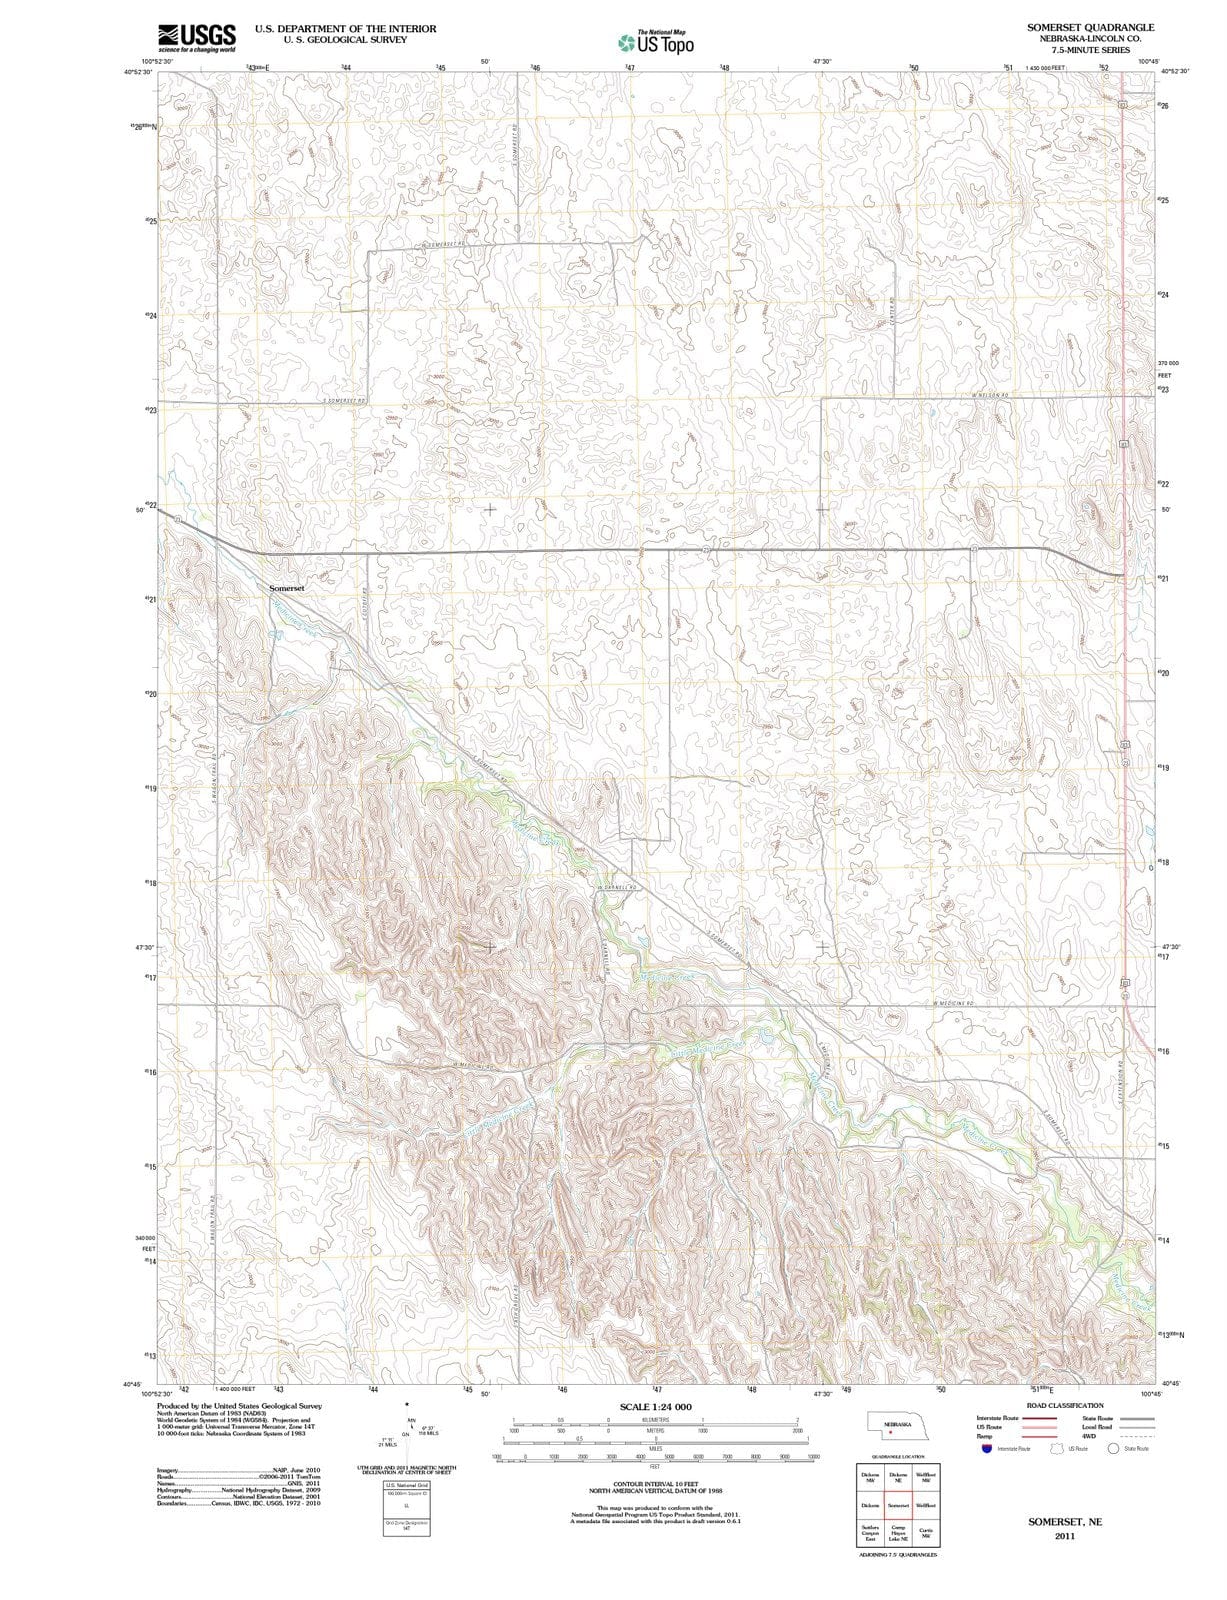 2011 Somerset, NE - Nebraska - USGS Topographic Map